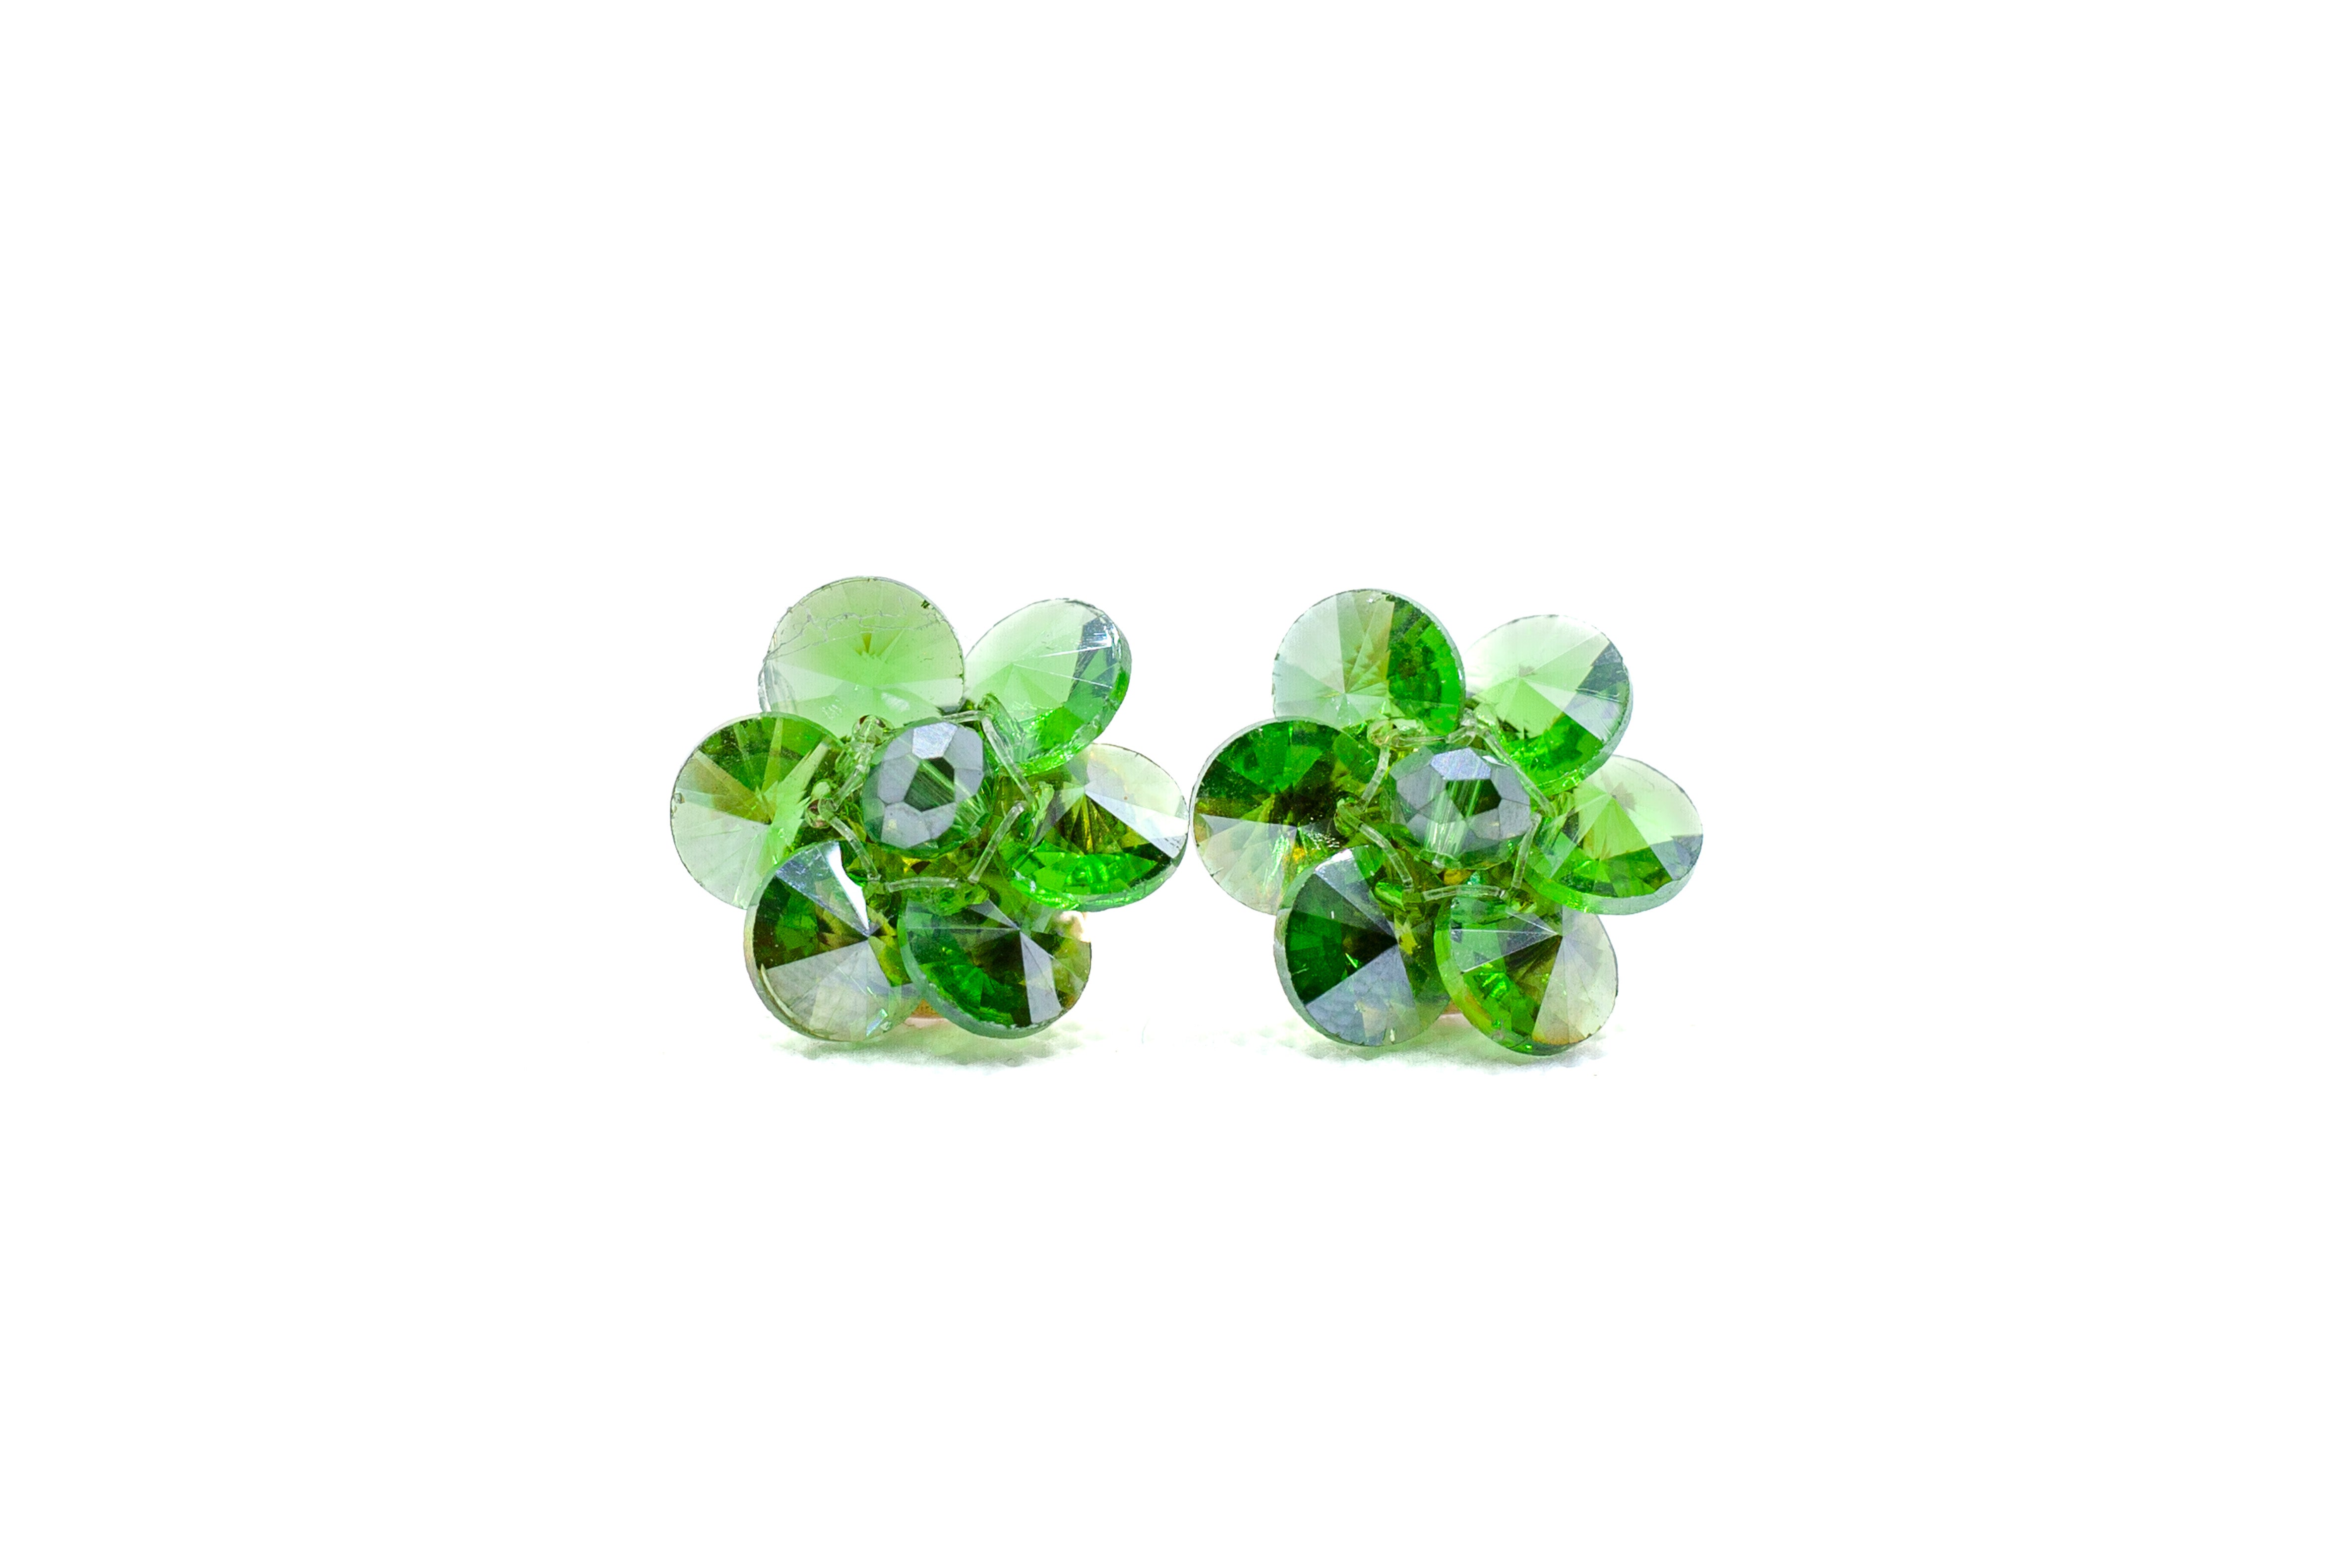 Protea style earrings